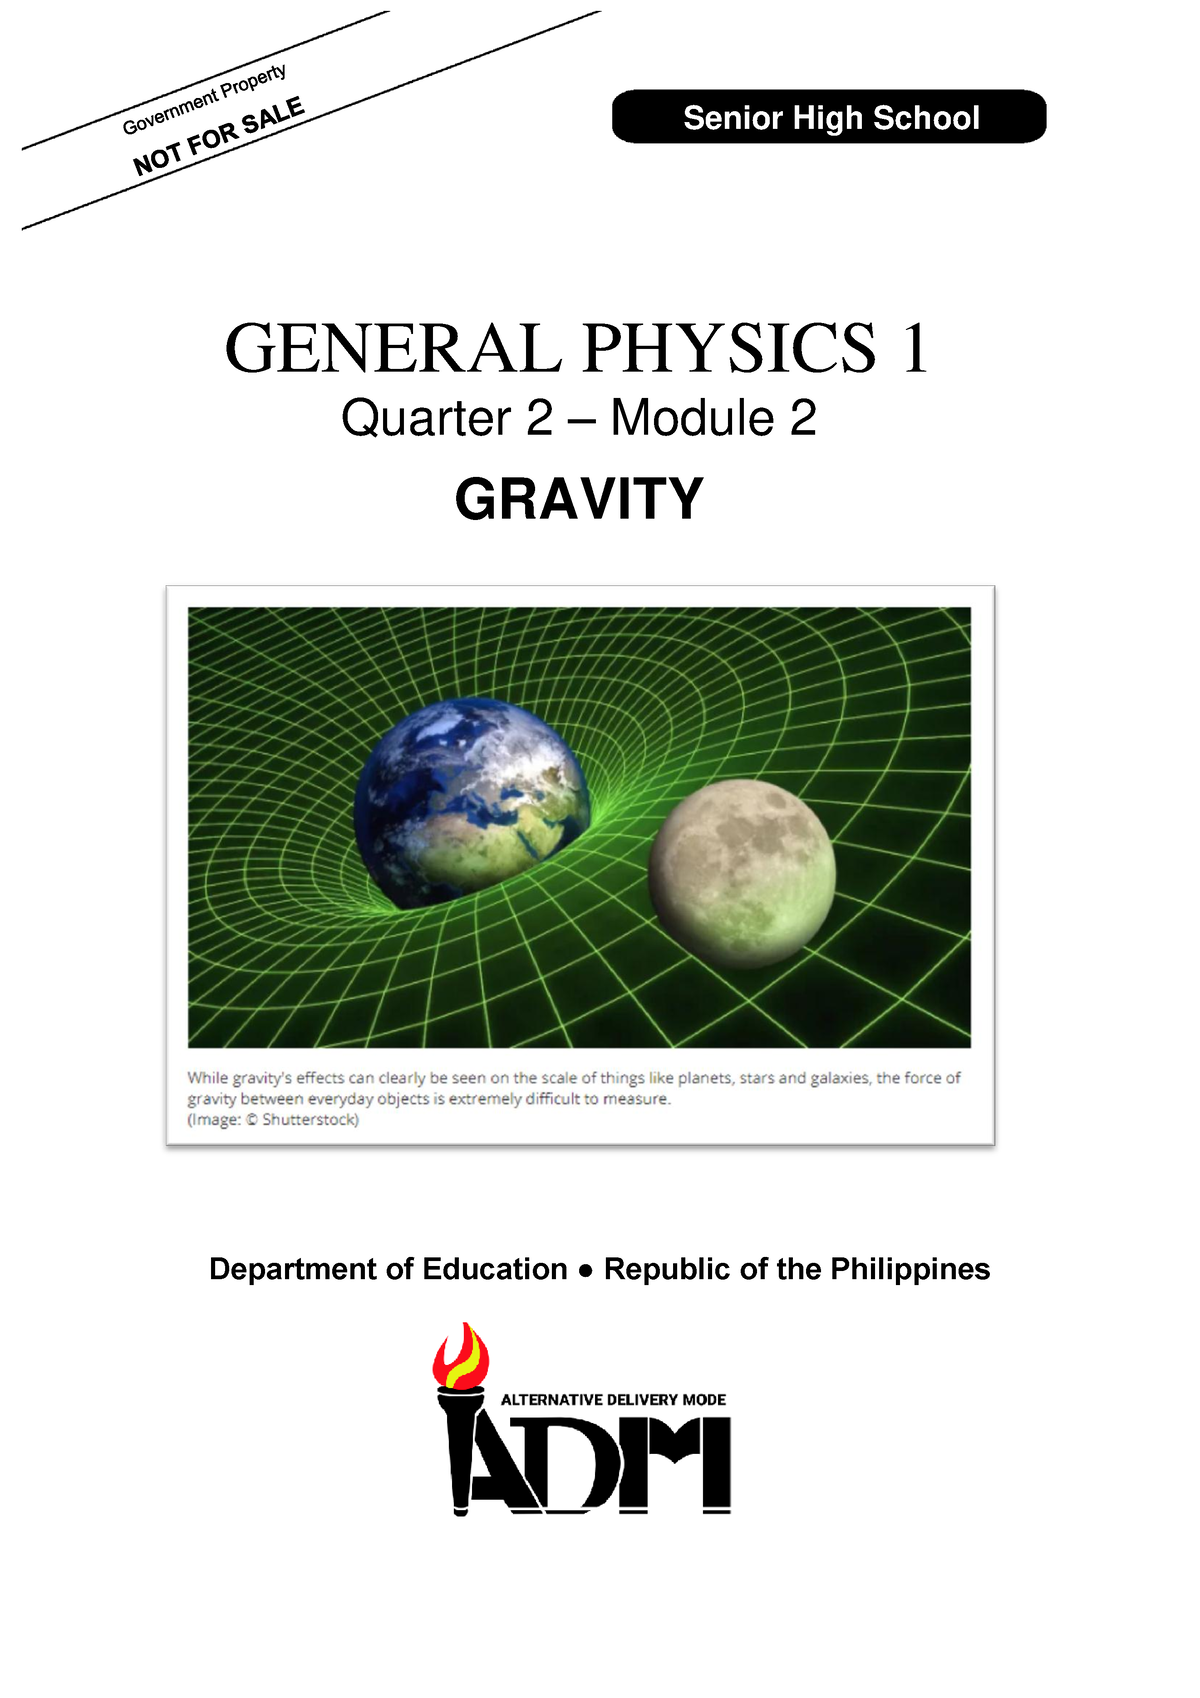 General Physics 1 12 Q2 Mod2 Gravity Version 2 General Physics 1 Quarter 2 Module 2 Gravity 0275